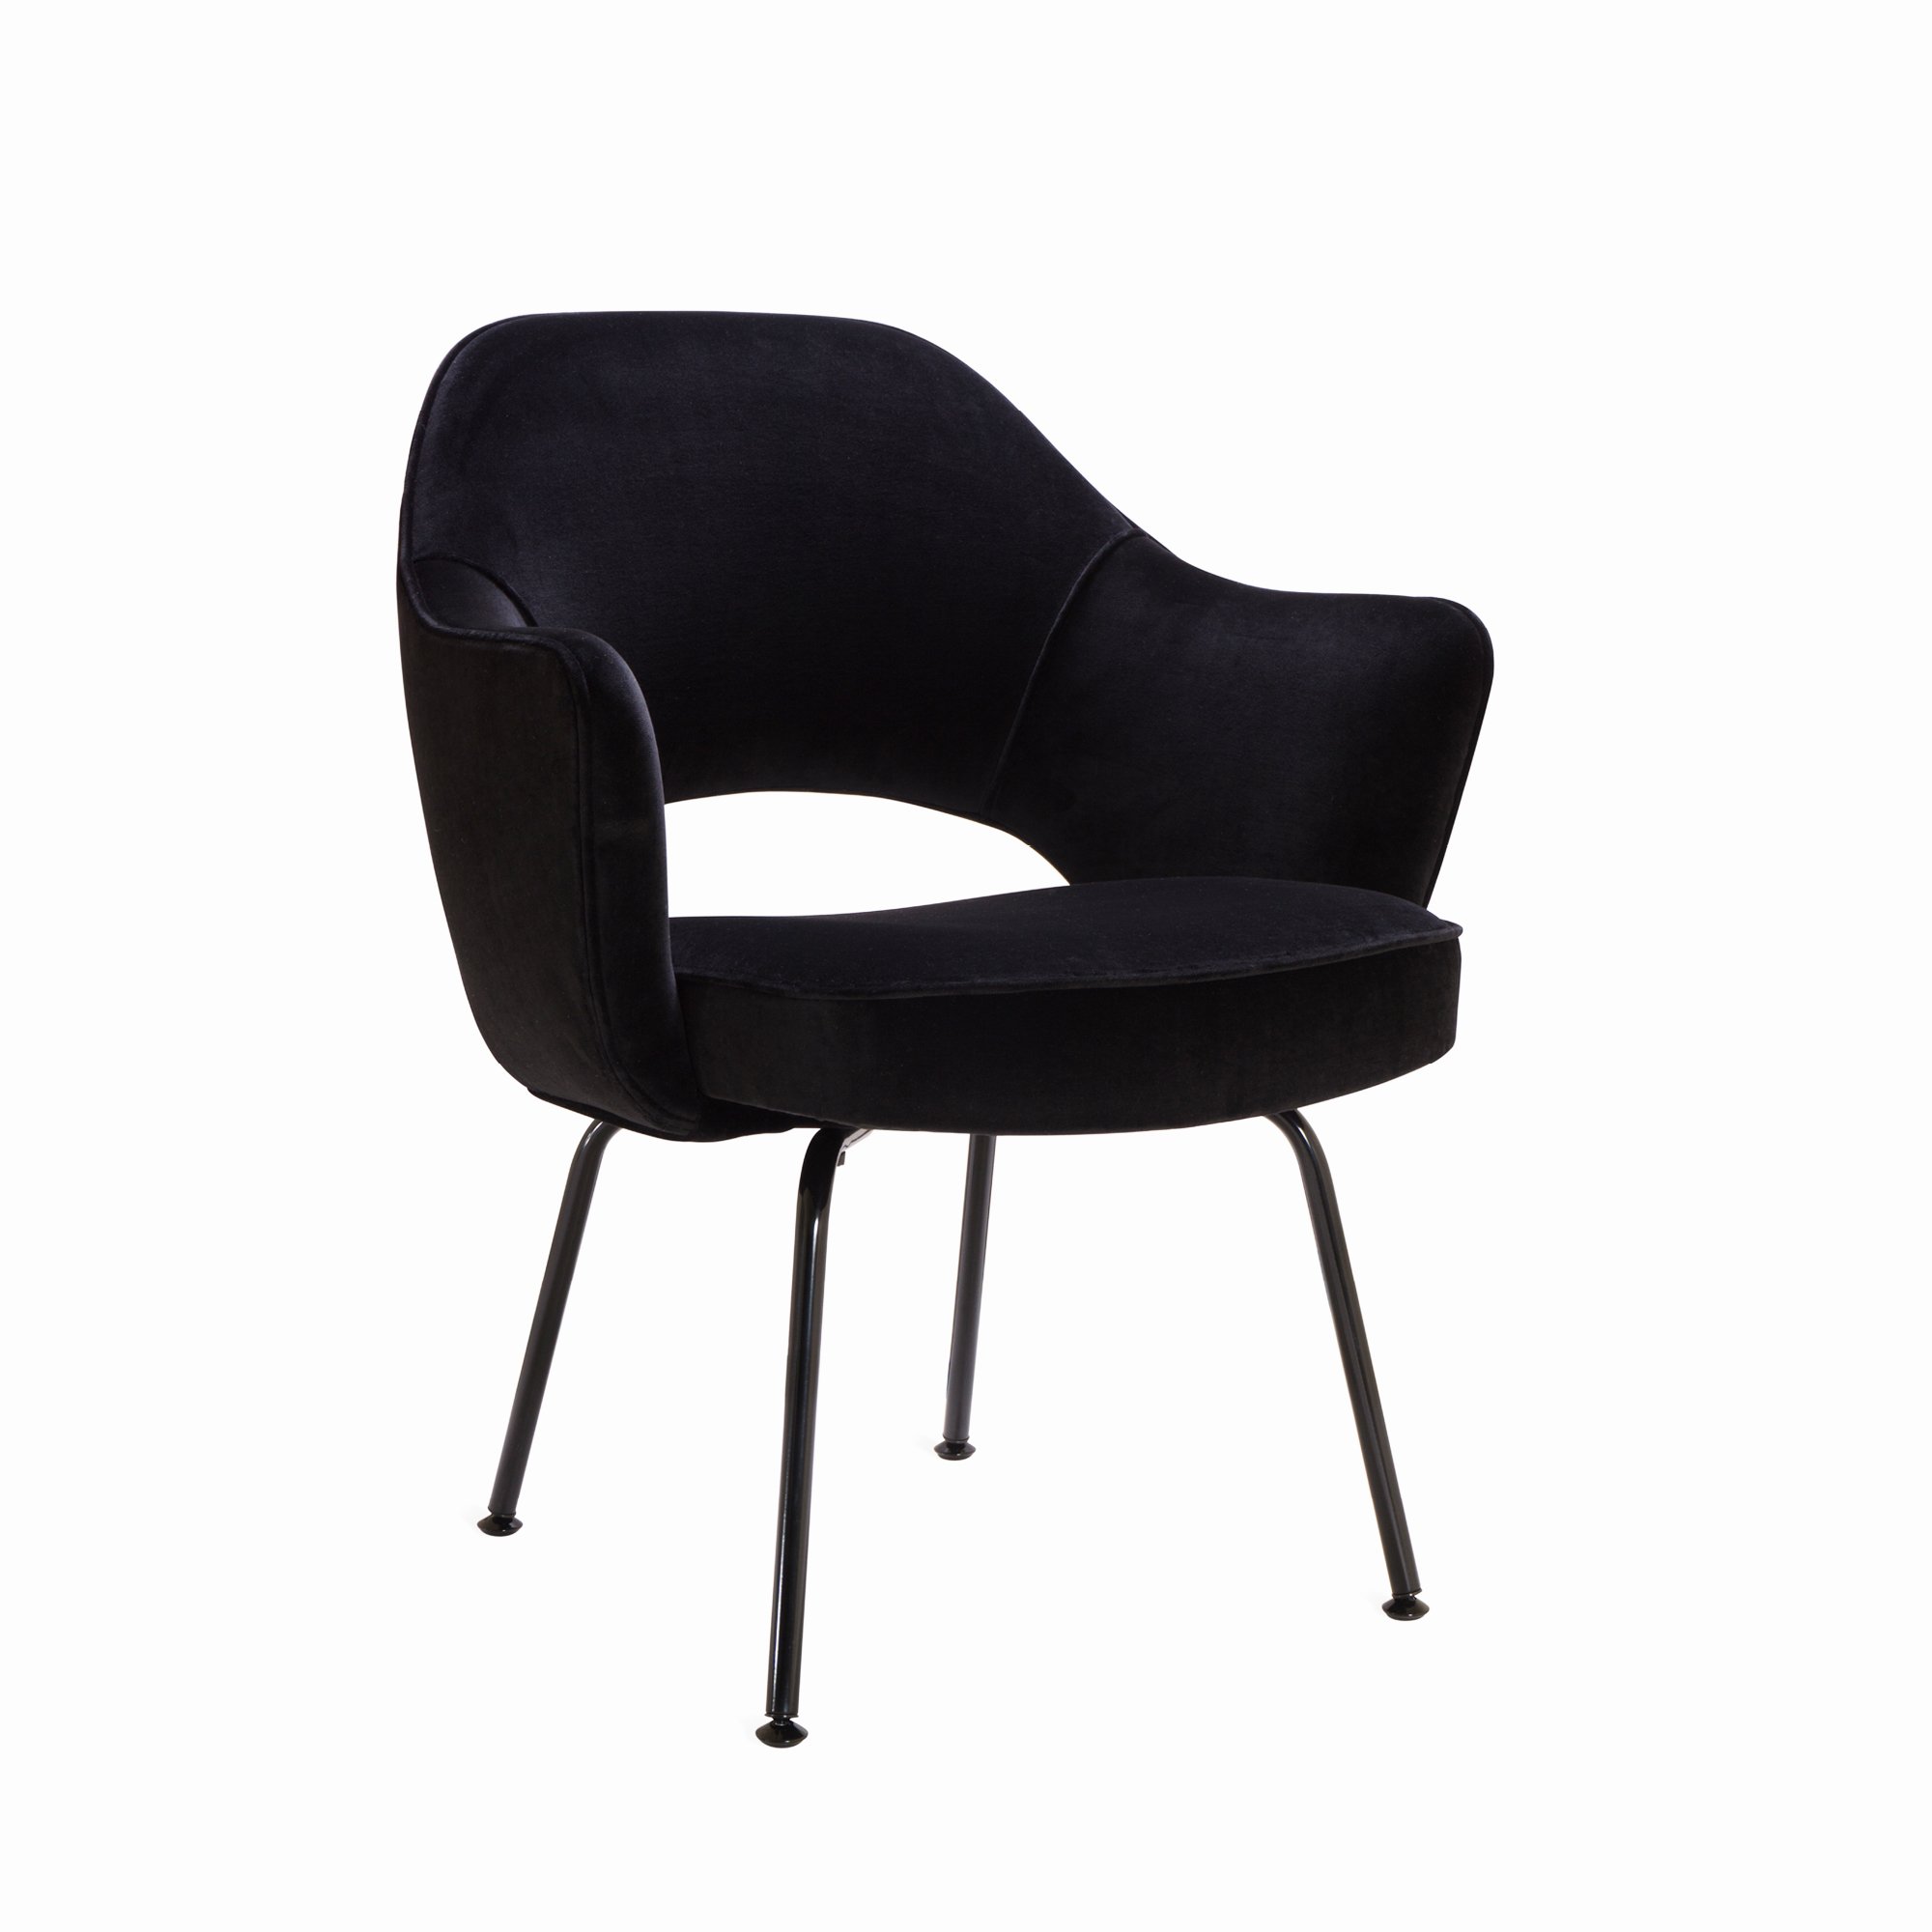 Saarinen Executive Arm Chair, Black Edition3.jpg